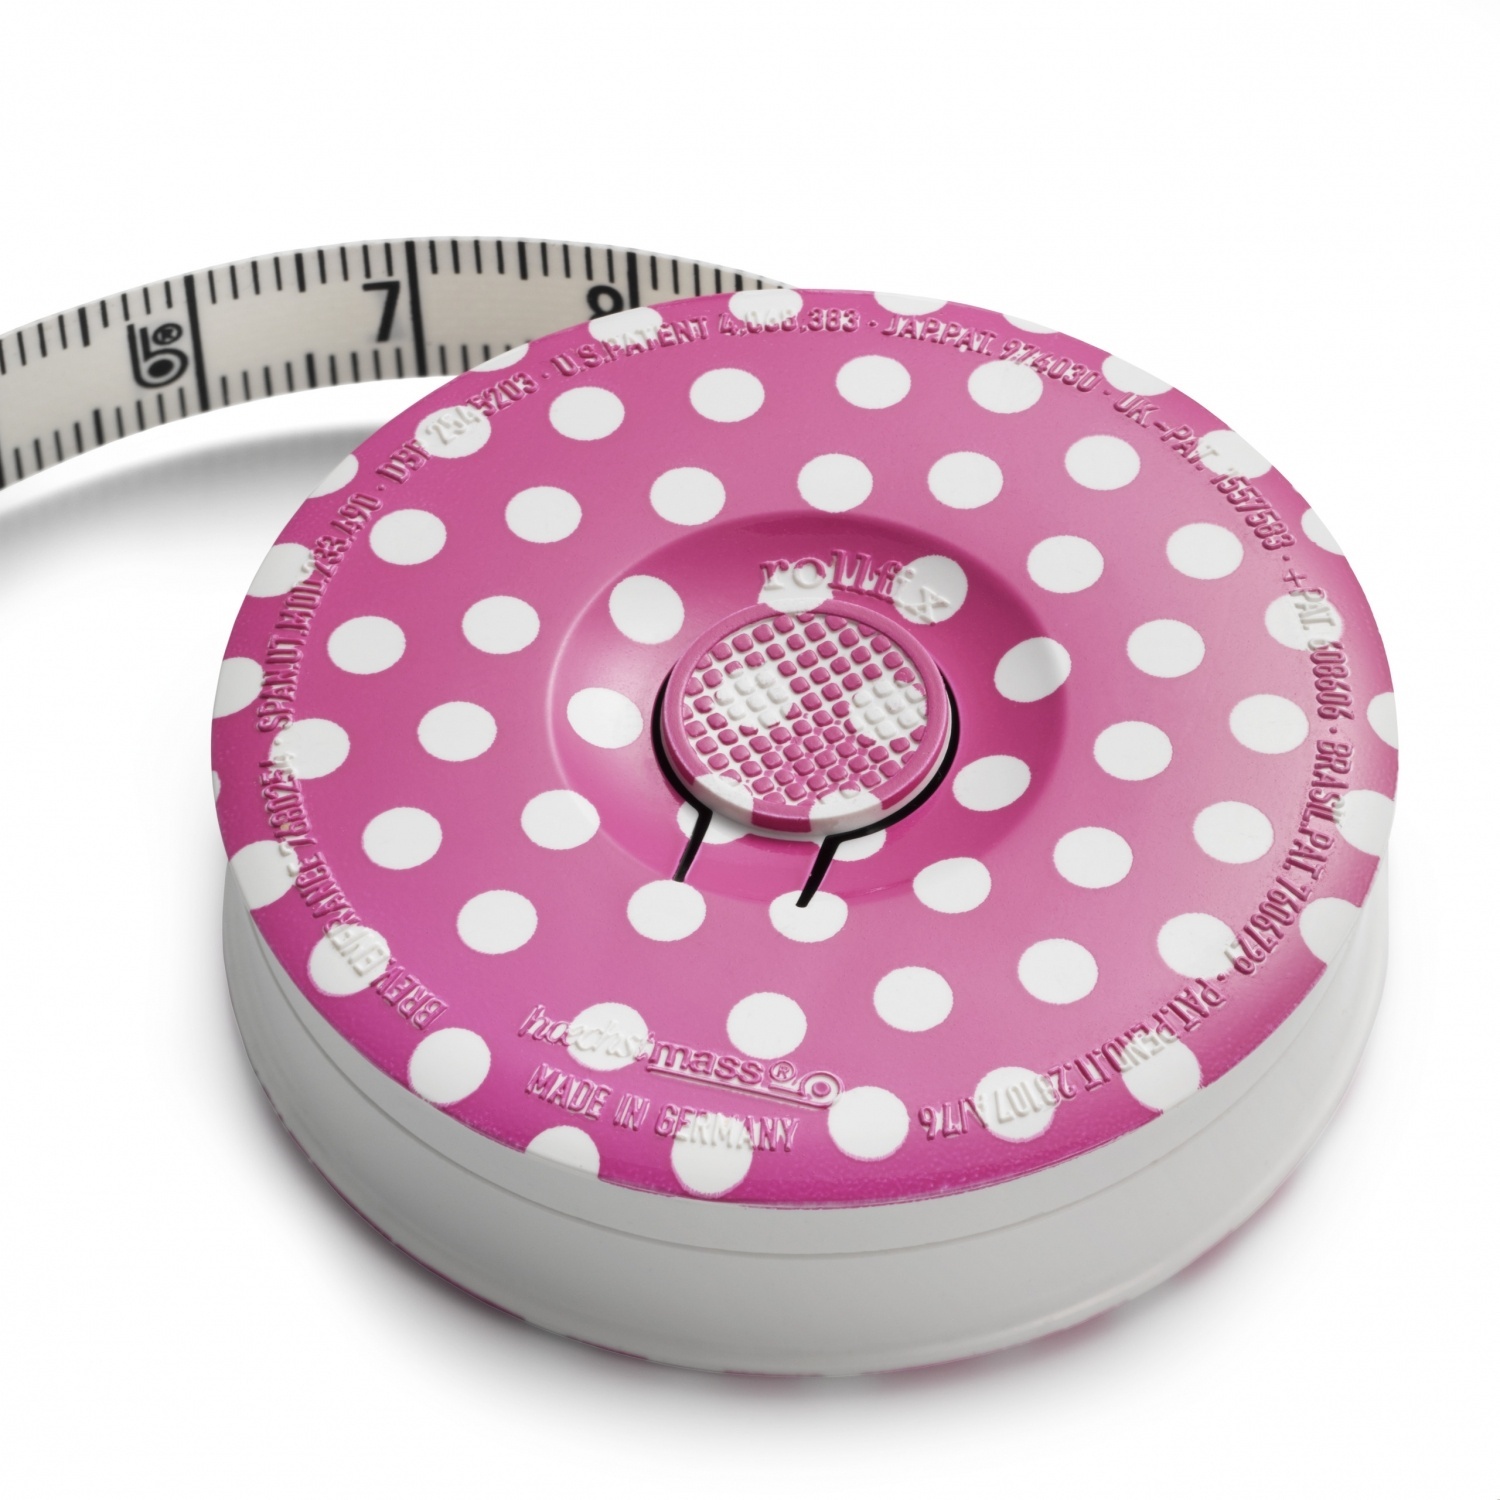 Spring tape measure Prym Love, pink, 150cm, арт. 282714 Prym